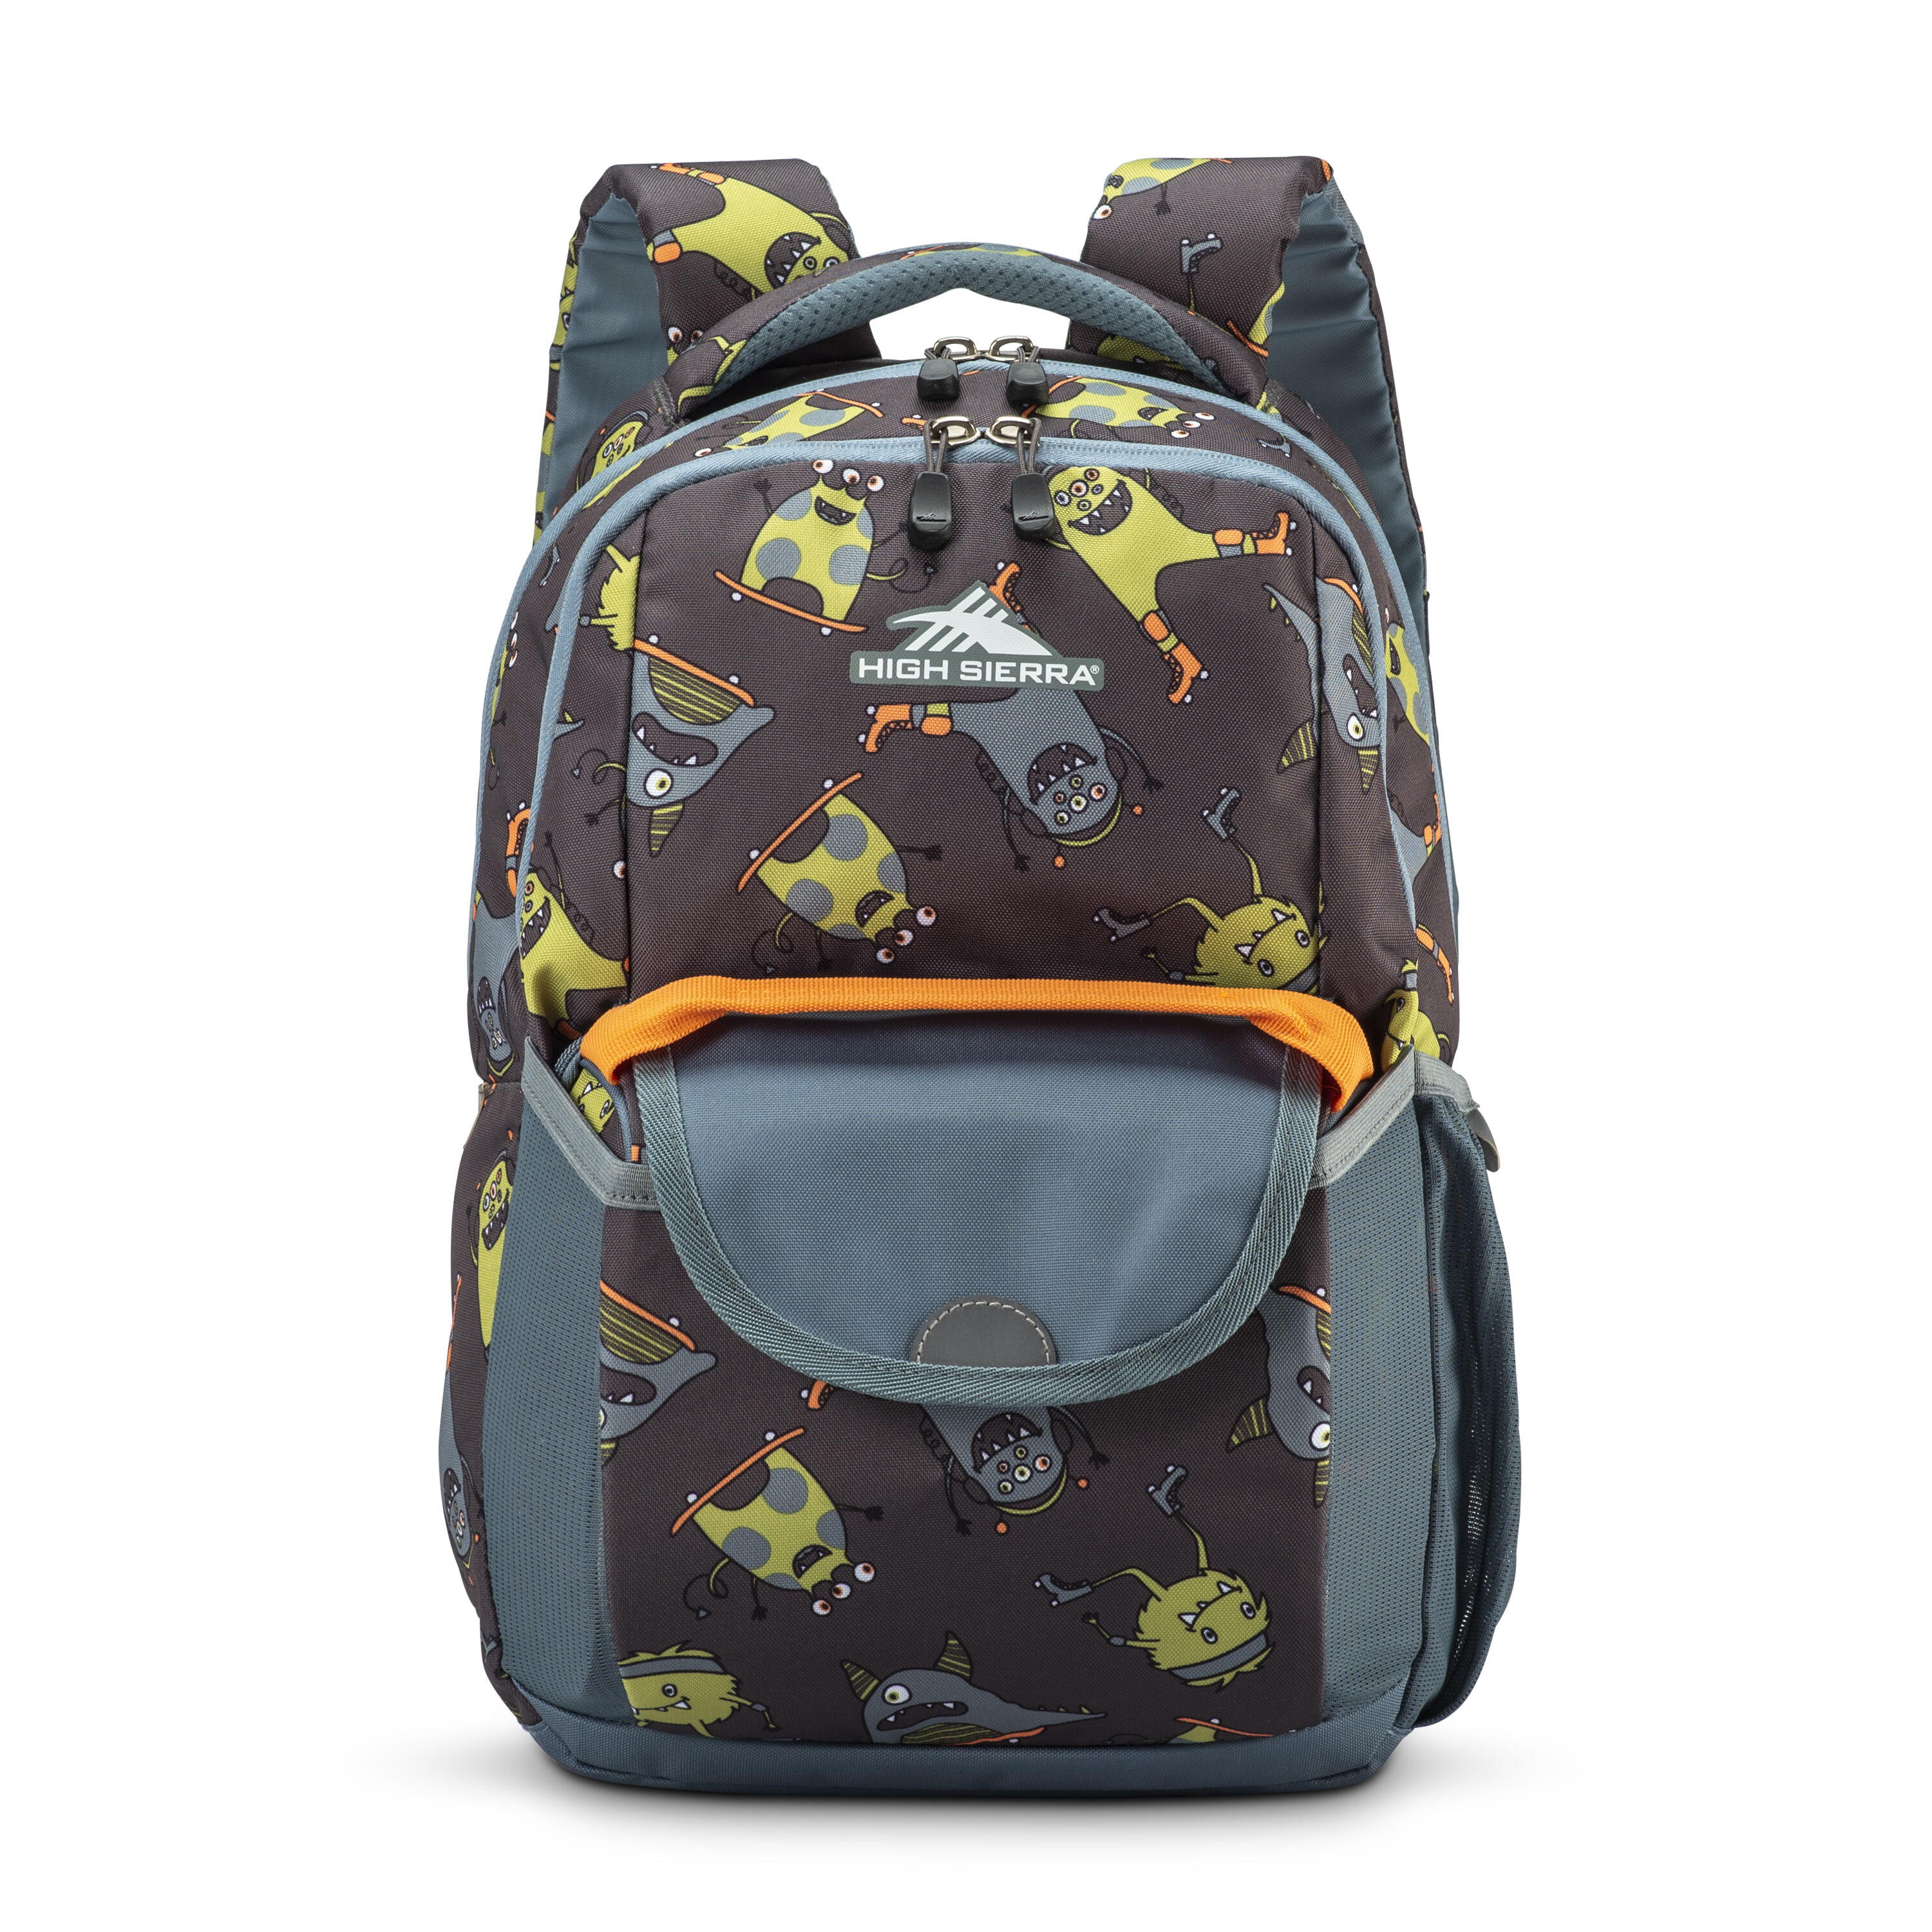 Ultralight Top Side Pocket | Lightest Modular Backpack & Hiking Pocket –  Zpacks